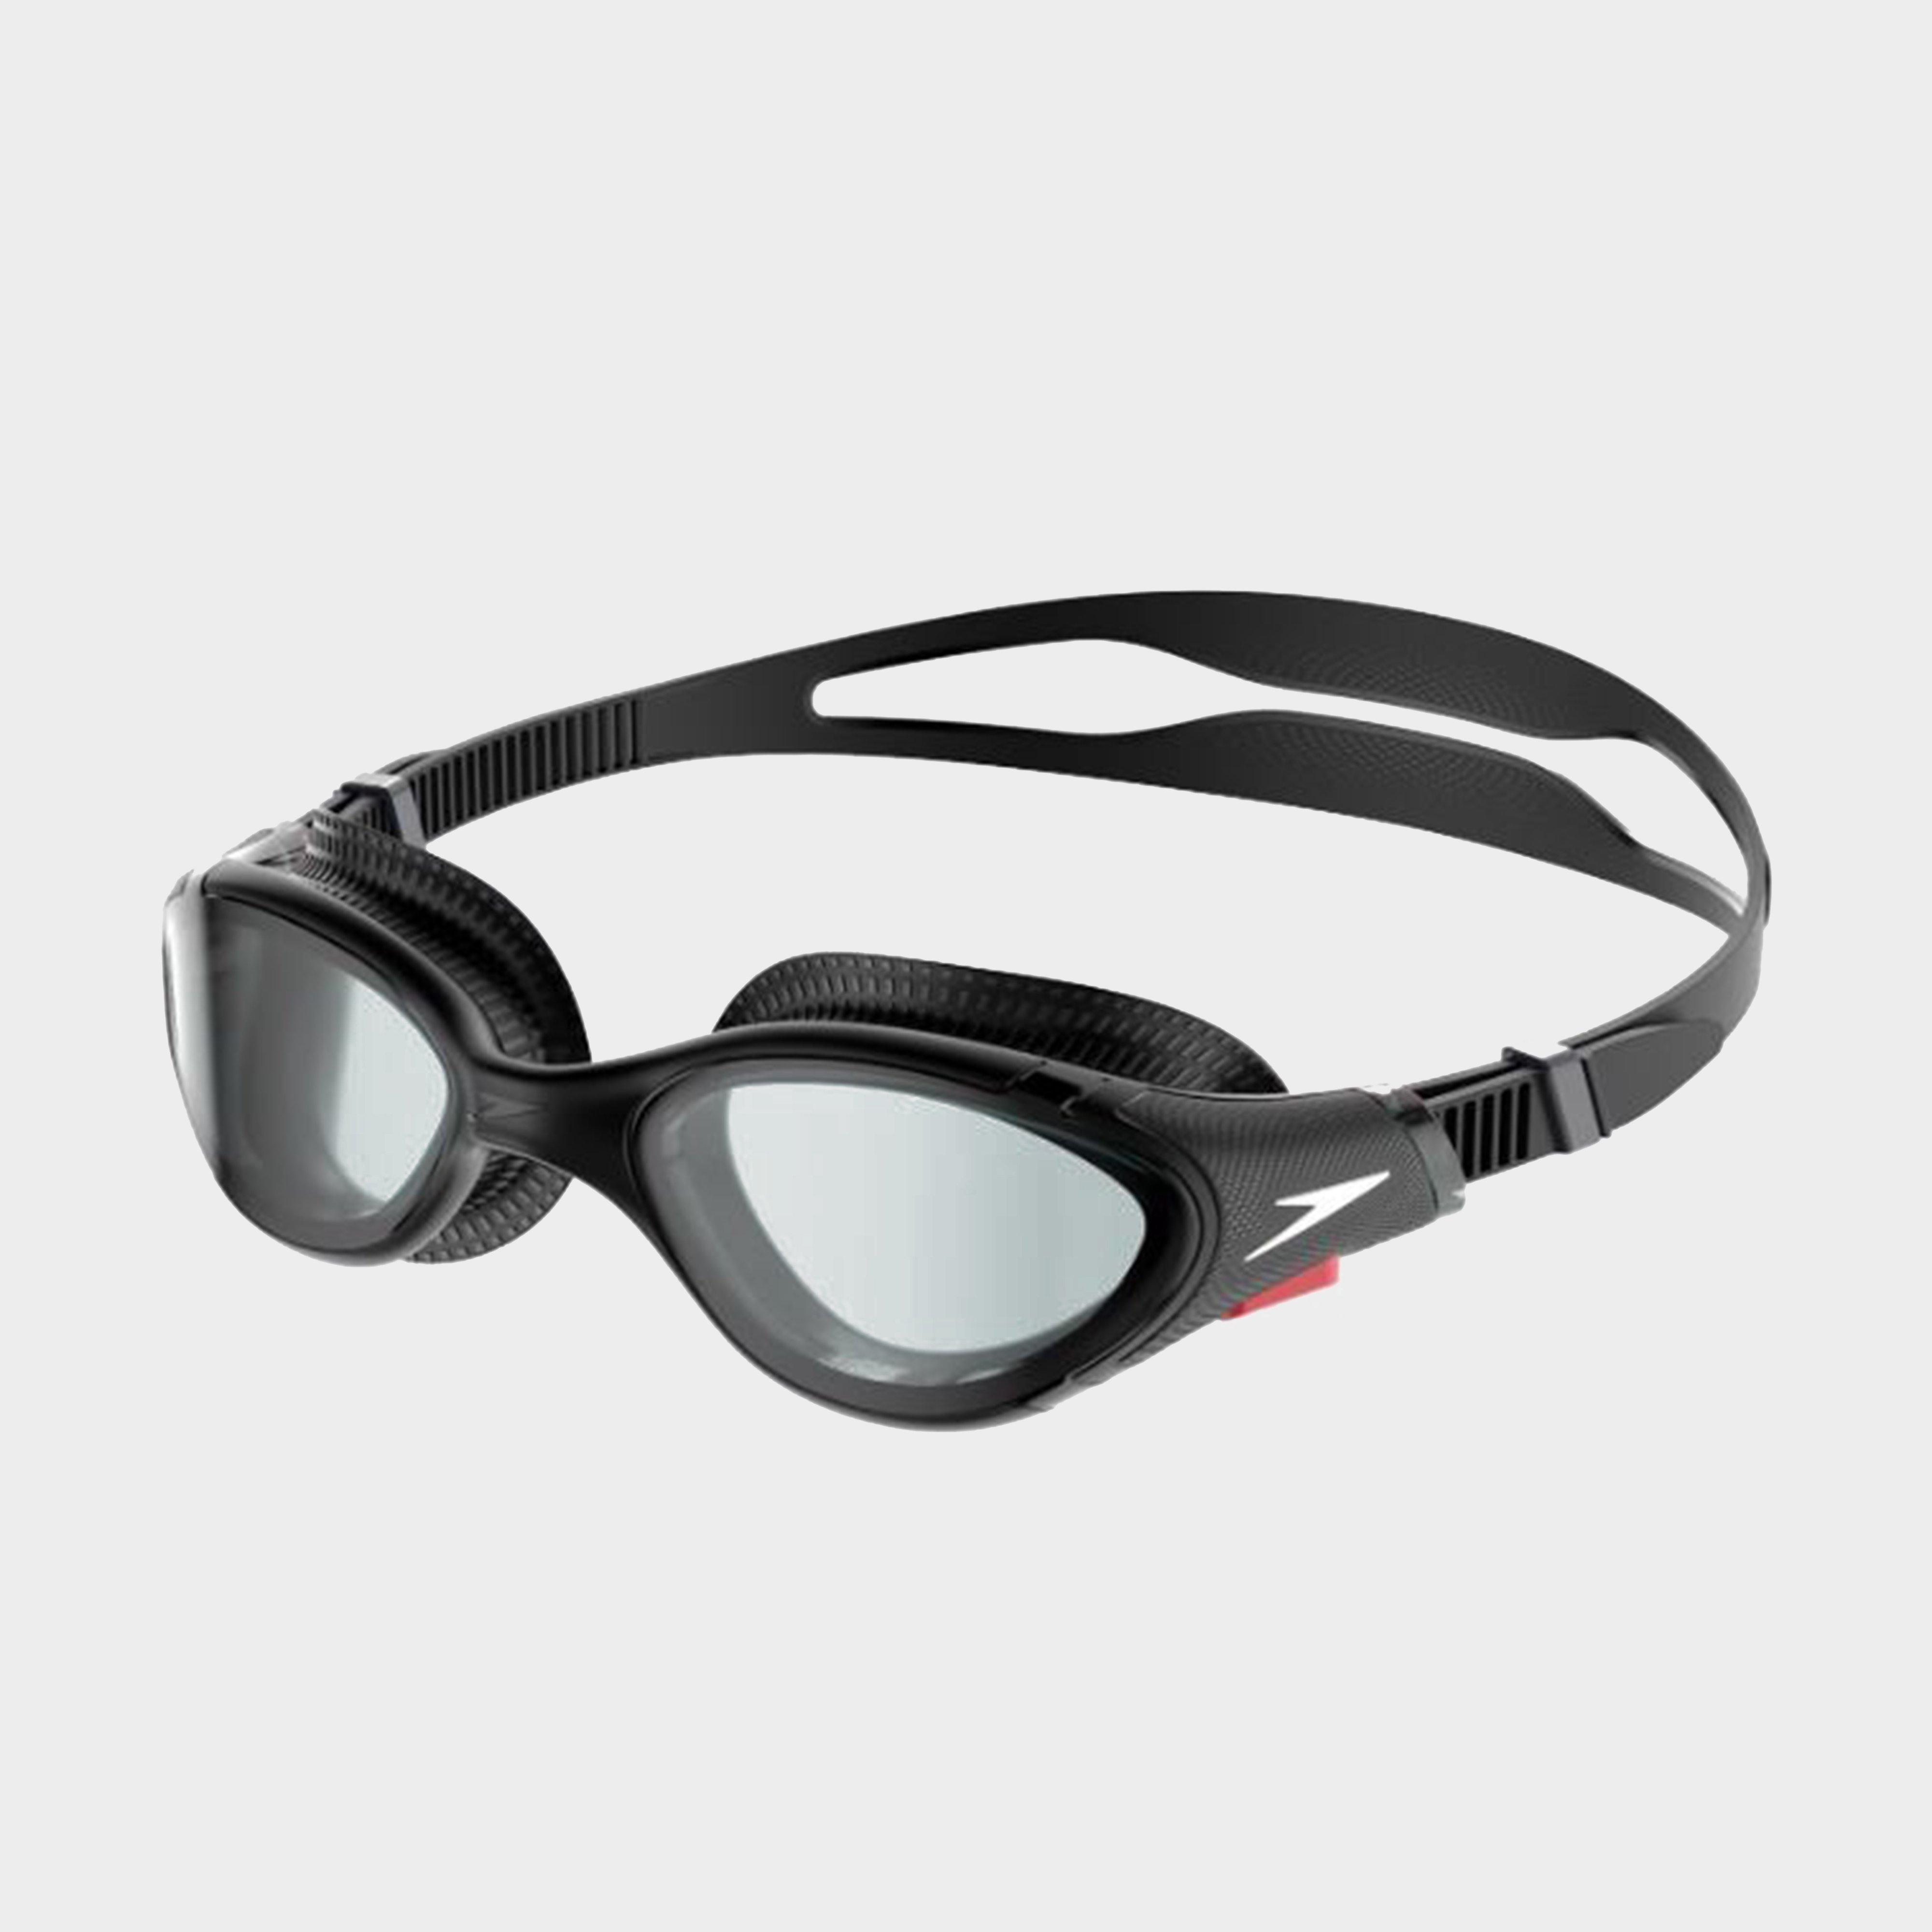 Biofuse 2.0 Goggles - Black, Black